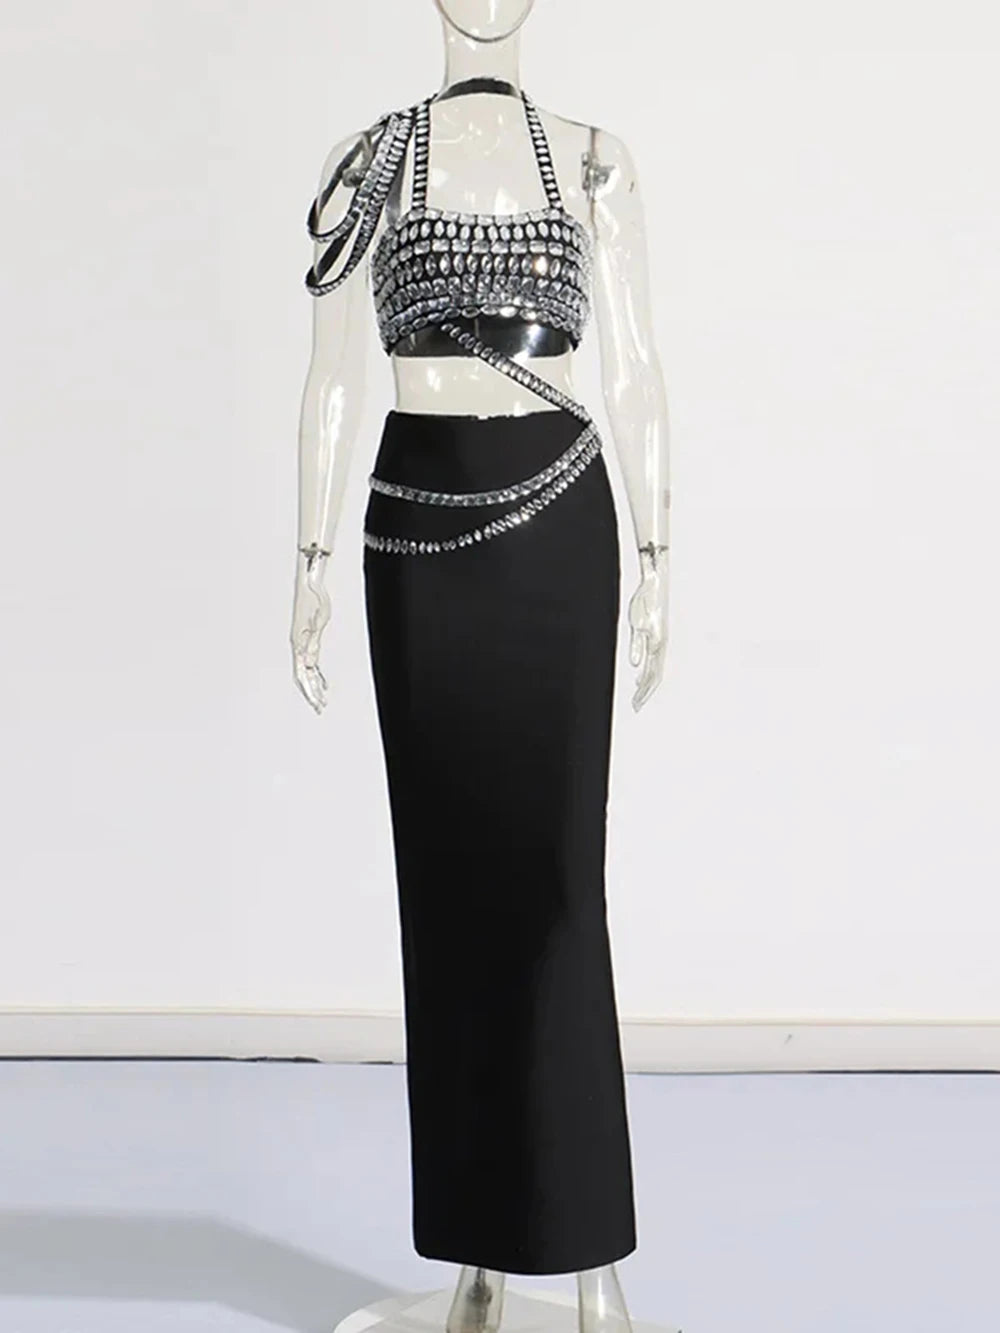 Black Crystal One Shoulder Top & Long Skirt Two-Piece Set